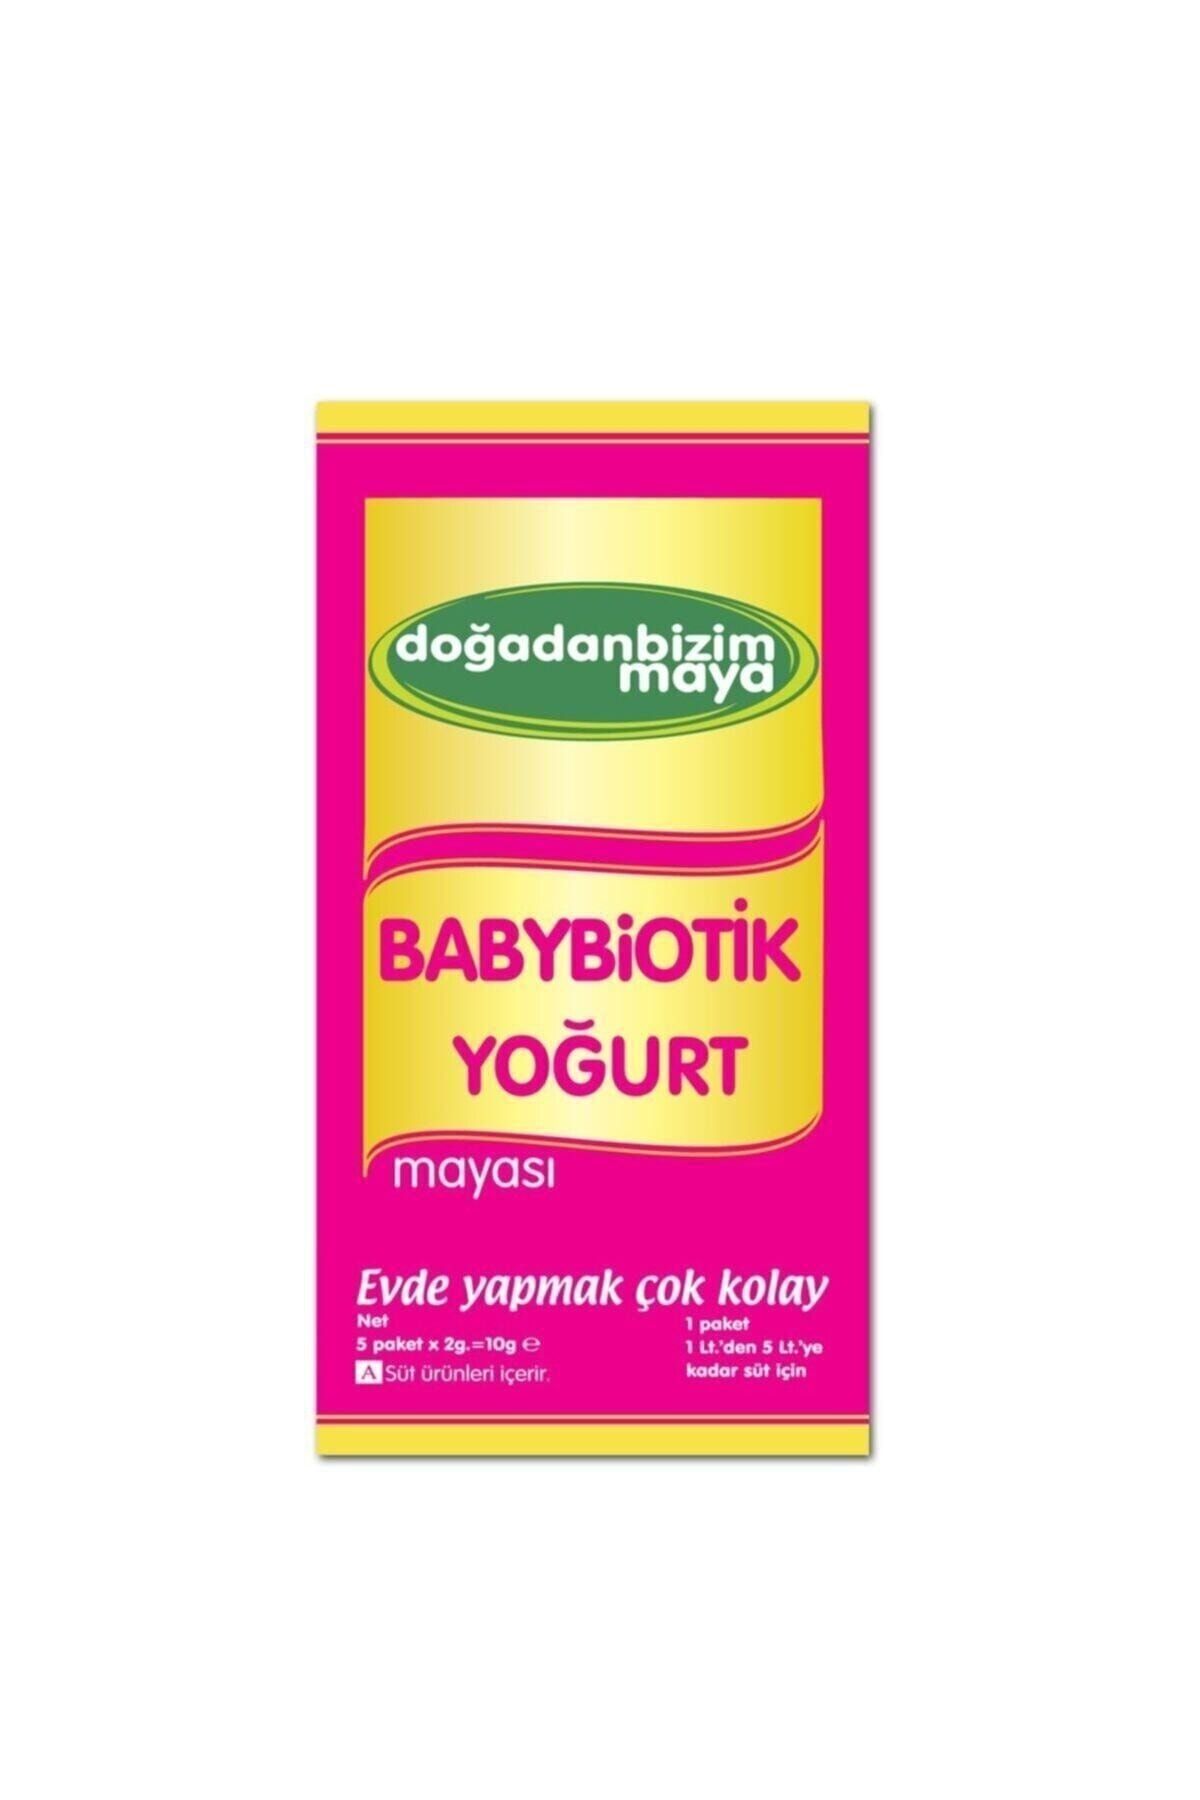 Doğadan Bizim Babybiotik Yoğurt Mayası 5'li Paket